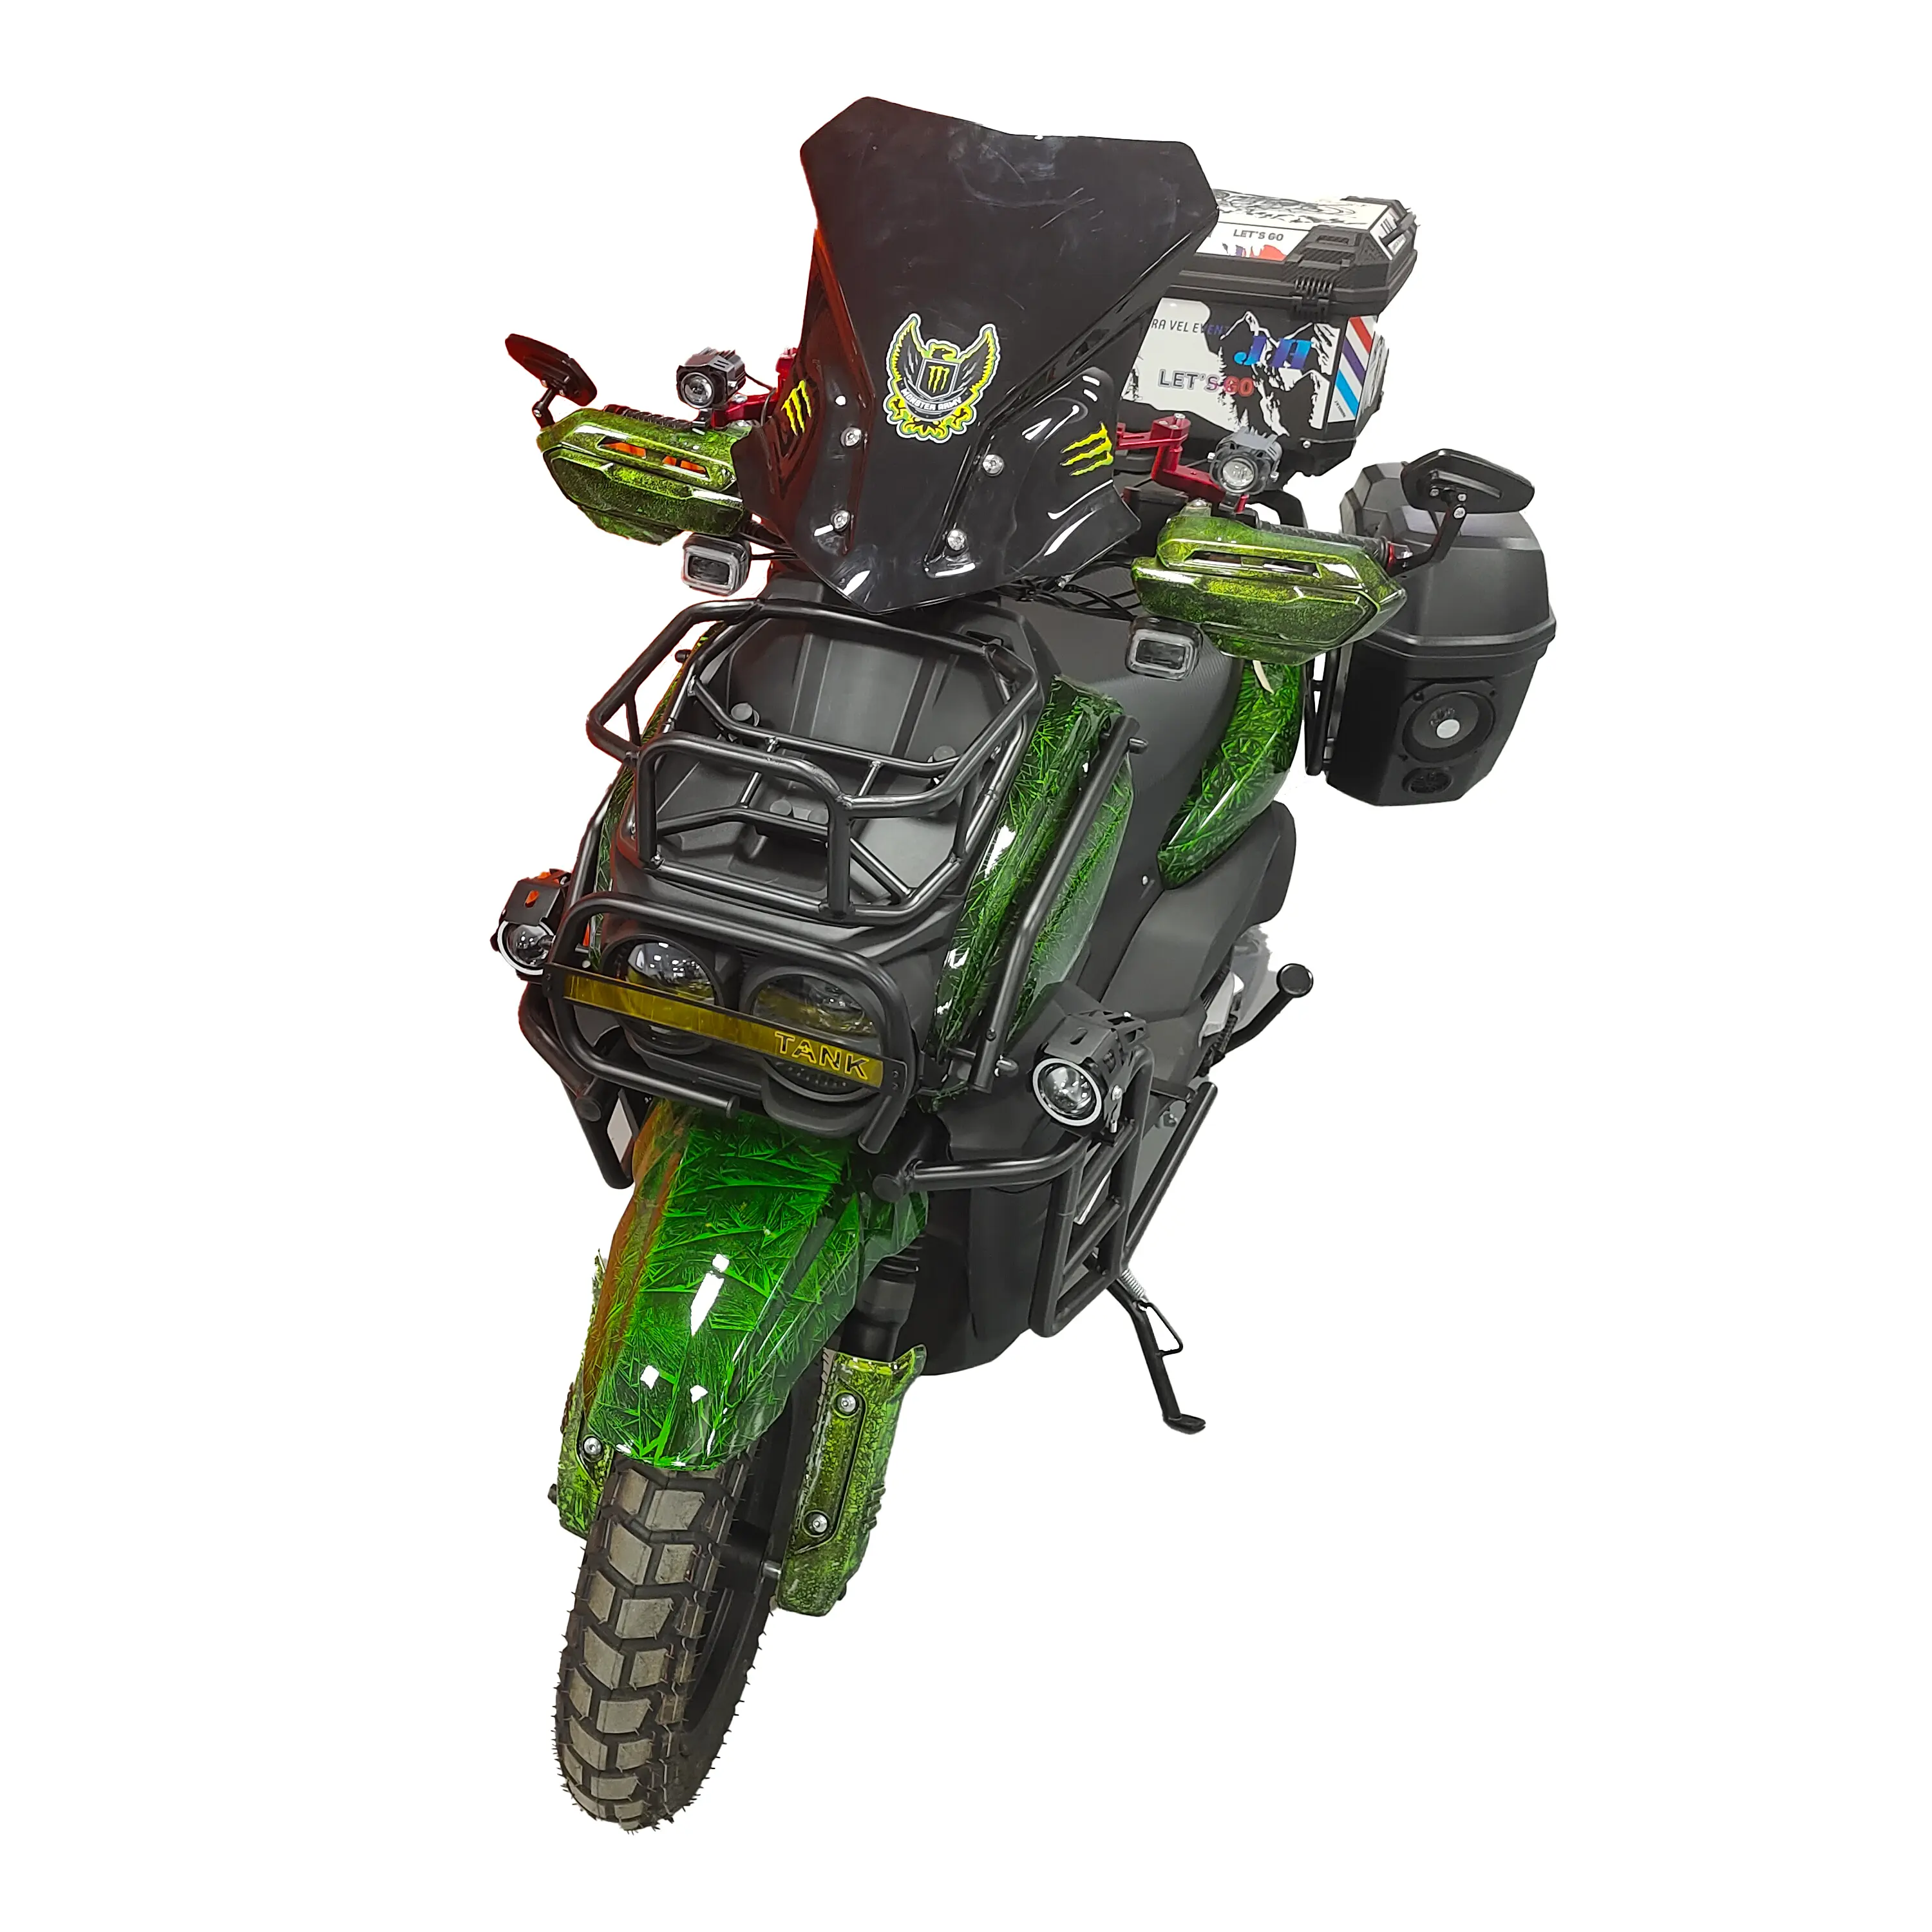 Bensin sepeda Motor bensin bahan bakar sepeda Motor Motocross 150cc Moped silinder tunggal sepeda Motor skuter listrik